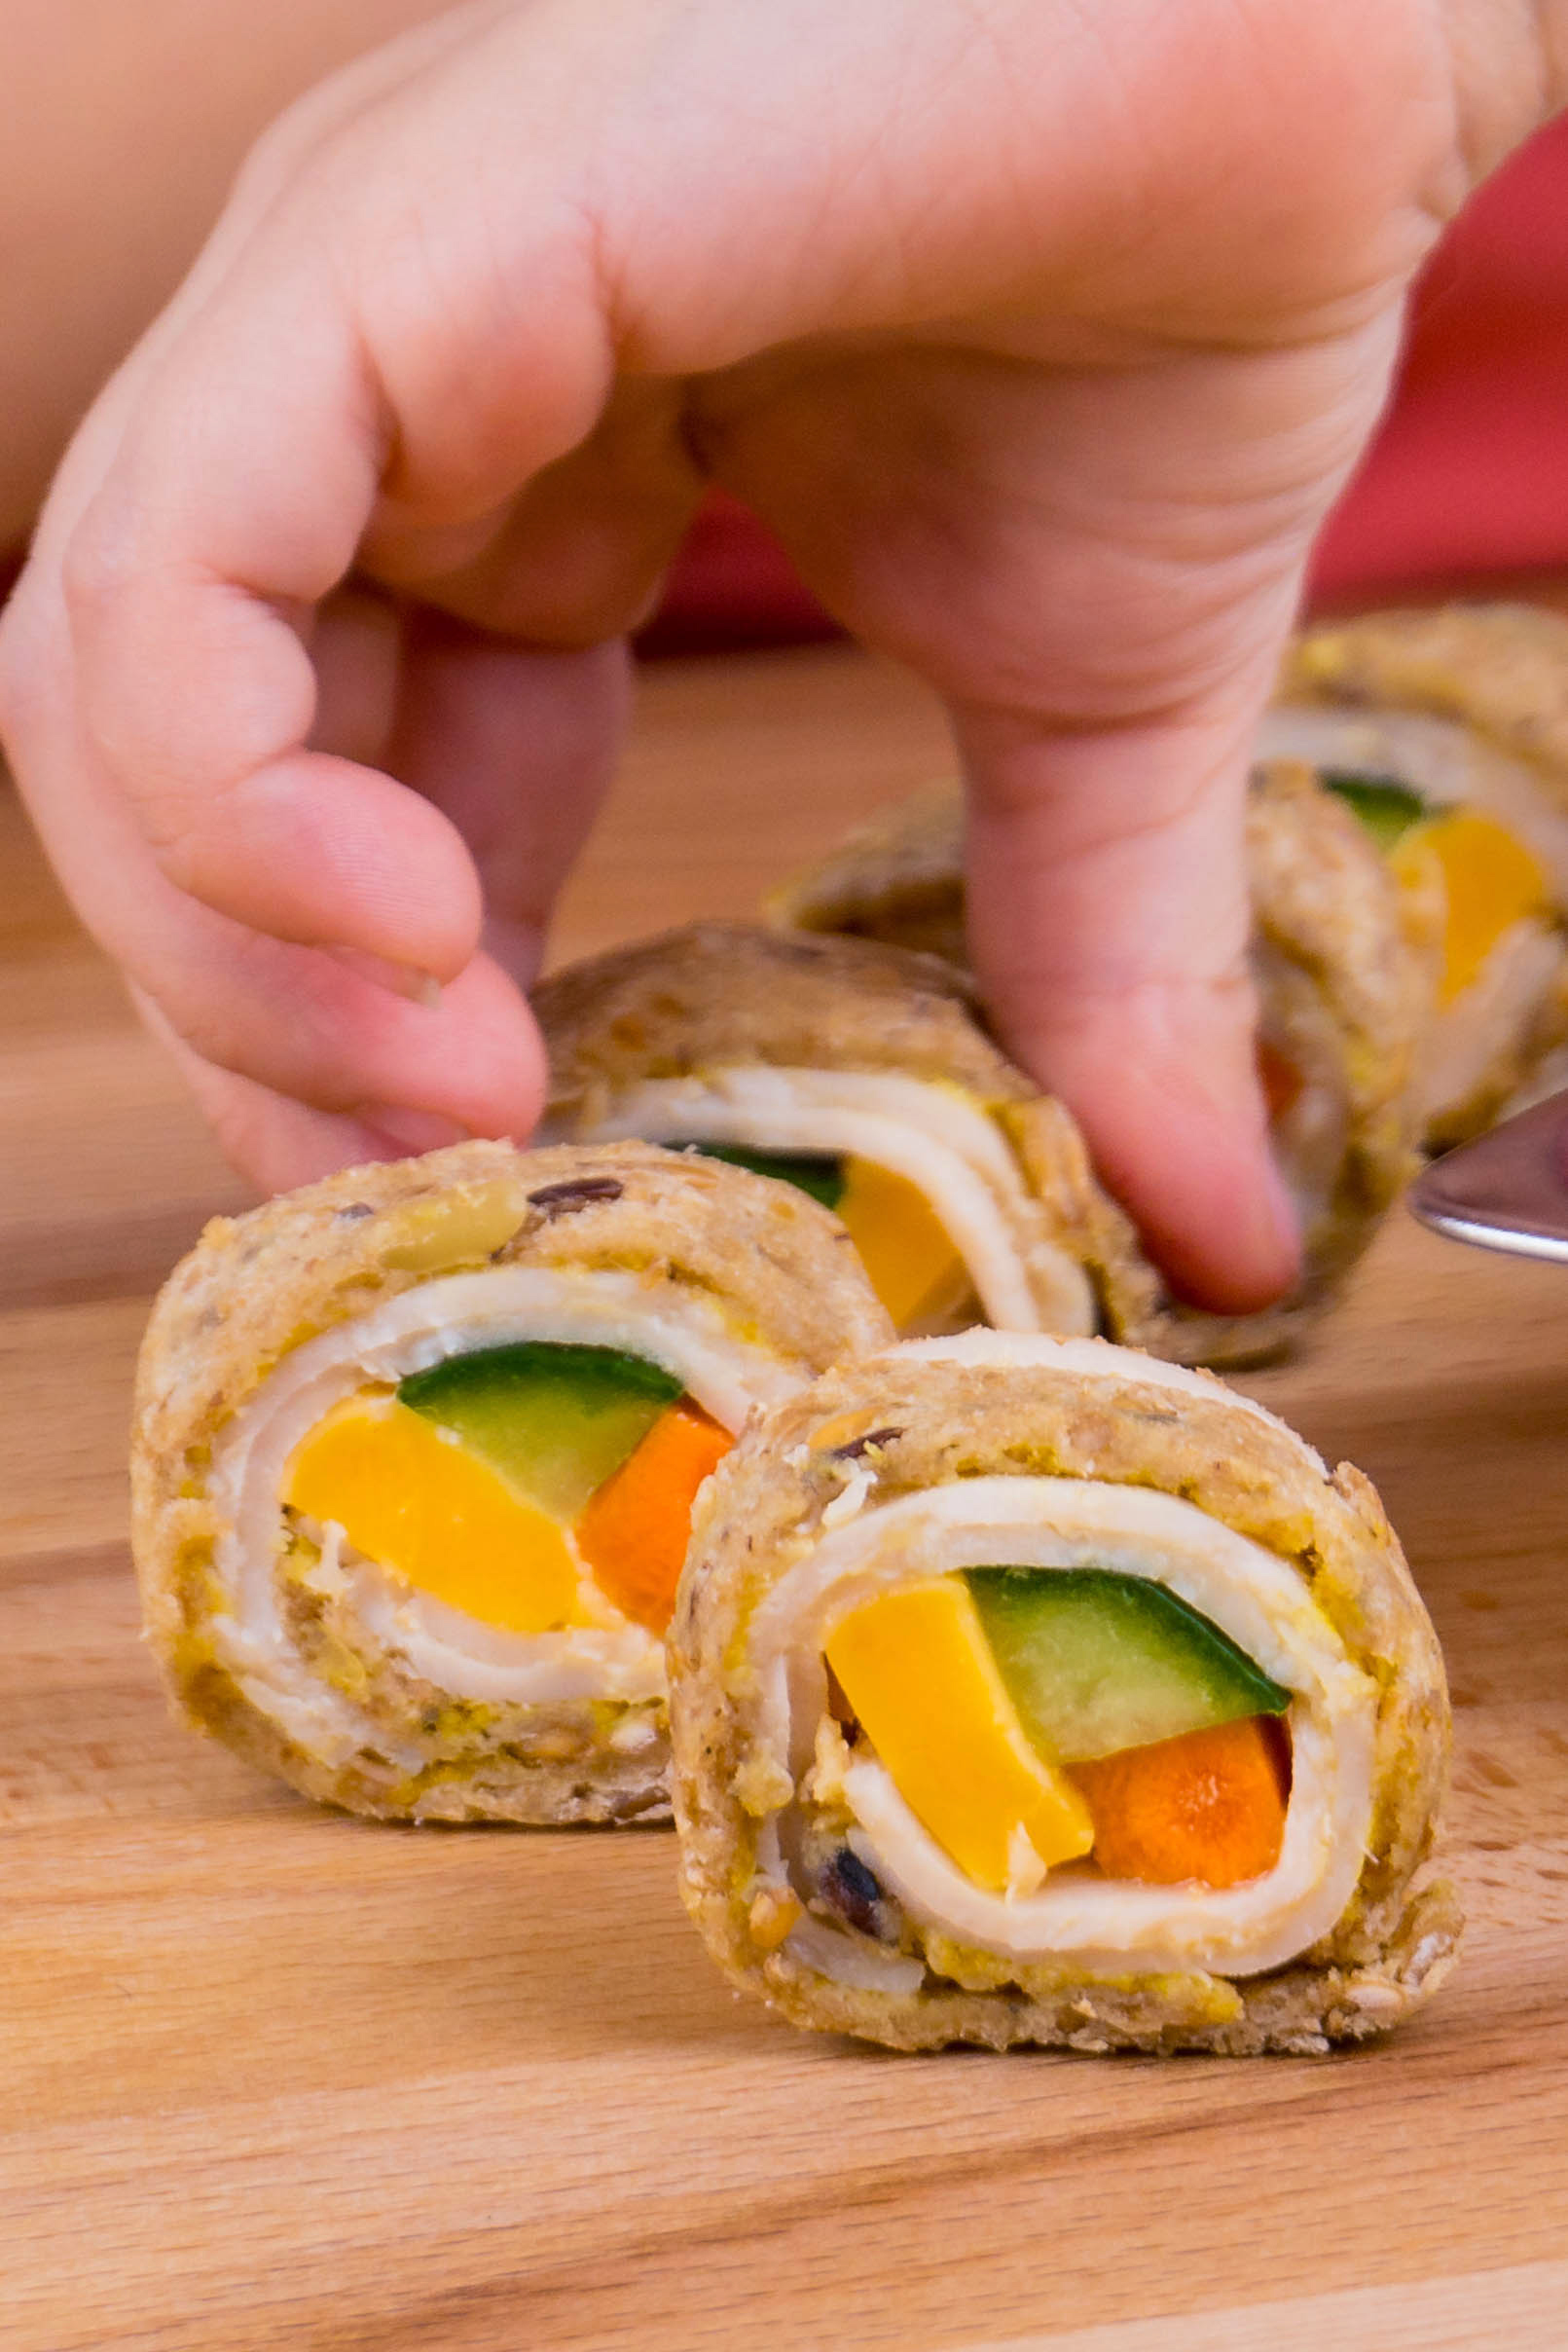 https://eatingrichly.com/wp-content/uploads/2018/08/sandwich-sushi-horizon-organic-04519.jpg